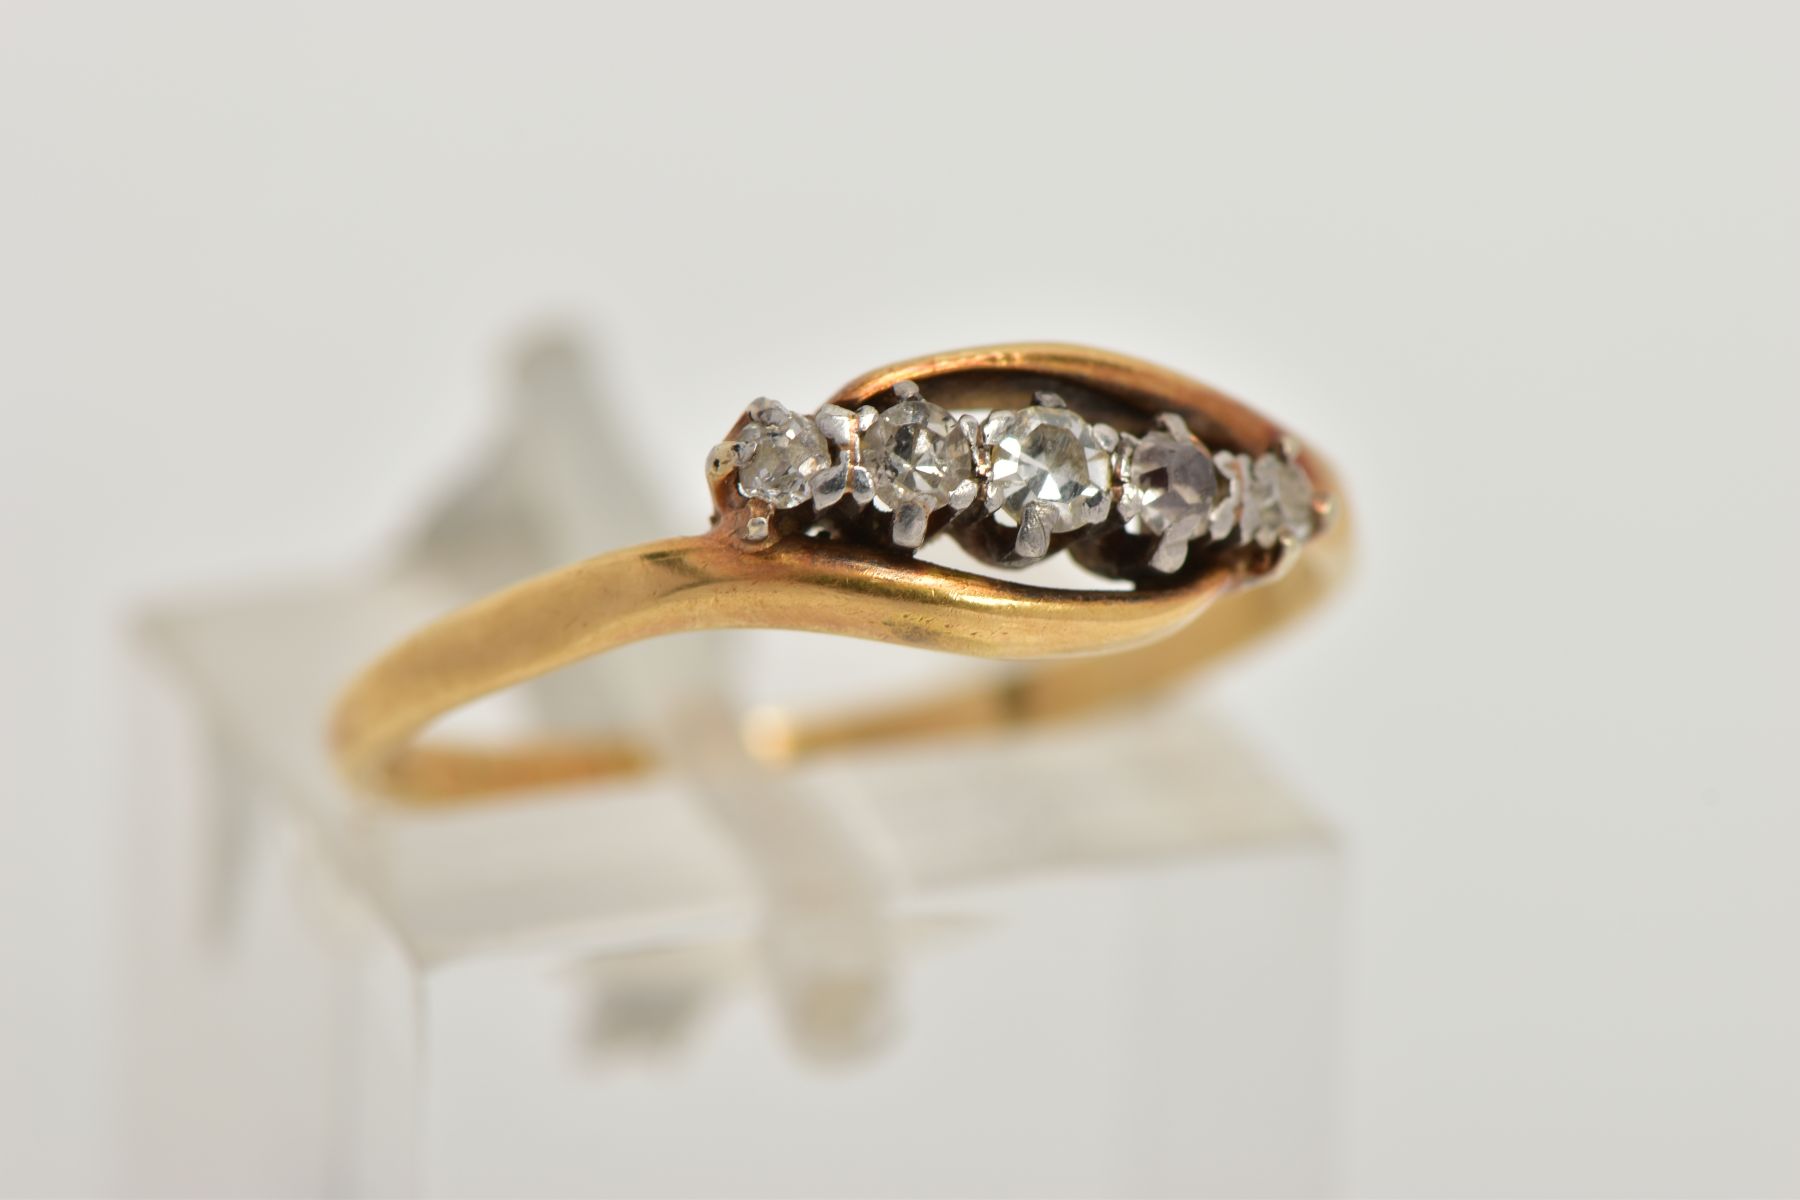 A YELLOW METAL FIVE STONE DIAMOND RING, designed with a row of graduating single cut diamonds, - Image 4 of 4